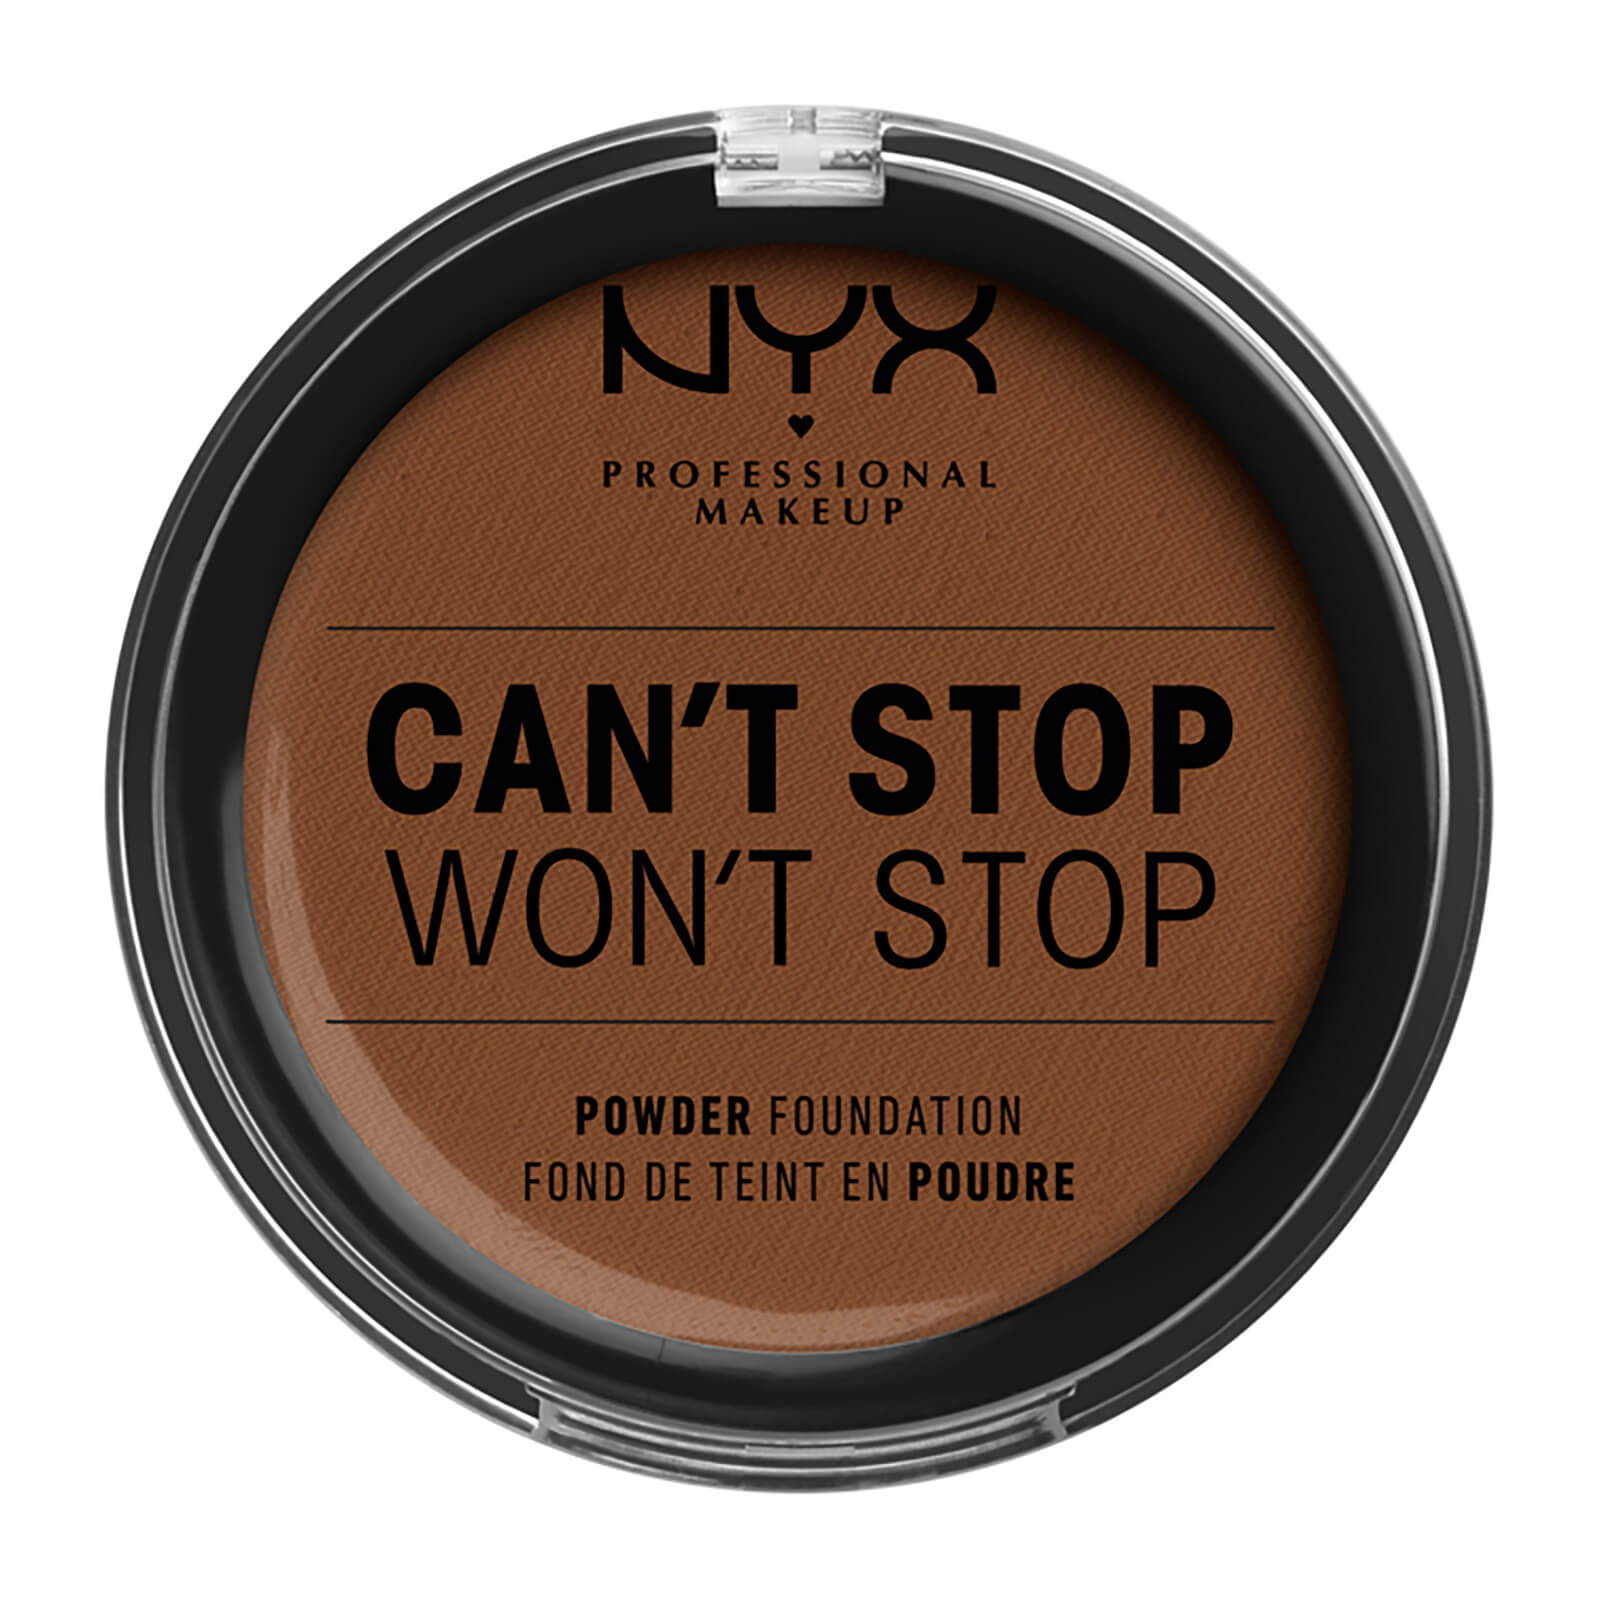 NYX Professional Makeup Can't Stop Won't Stop Powder Foundation (Various Shades) - Mocha